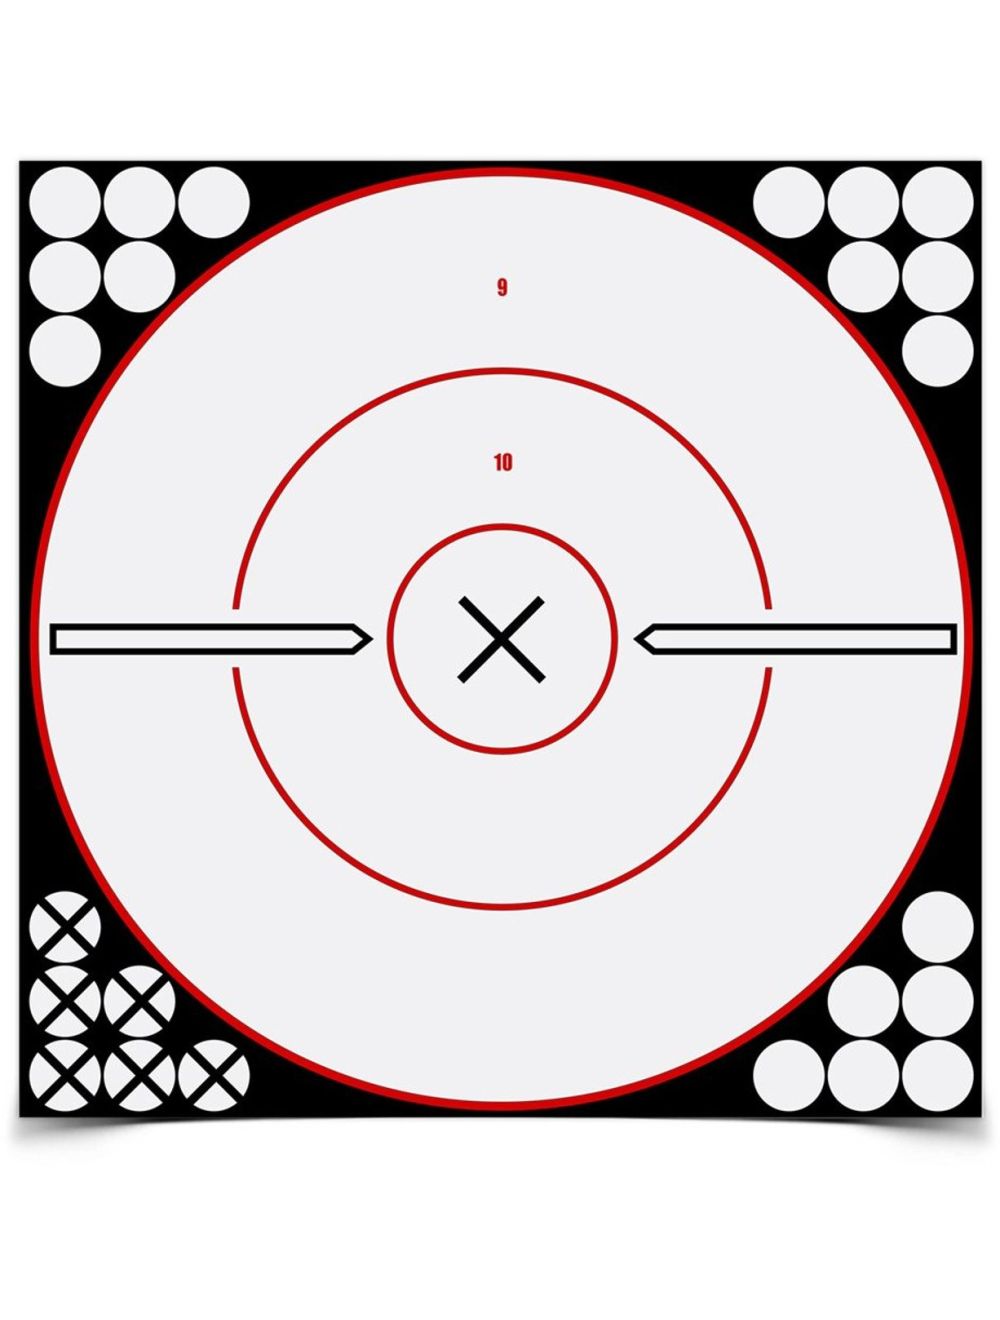 Shoot-N-C 12 Inch White / Black X Bull's-Eye, 5 Targets - 120 Pasters